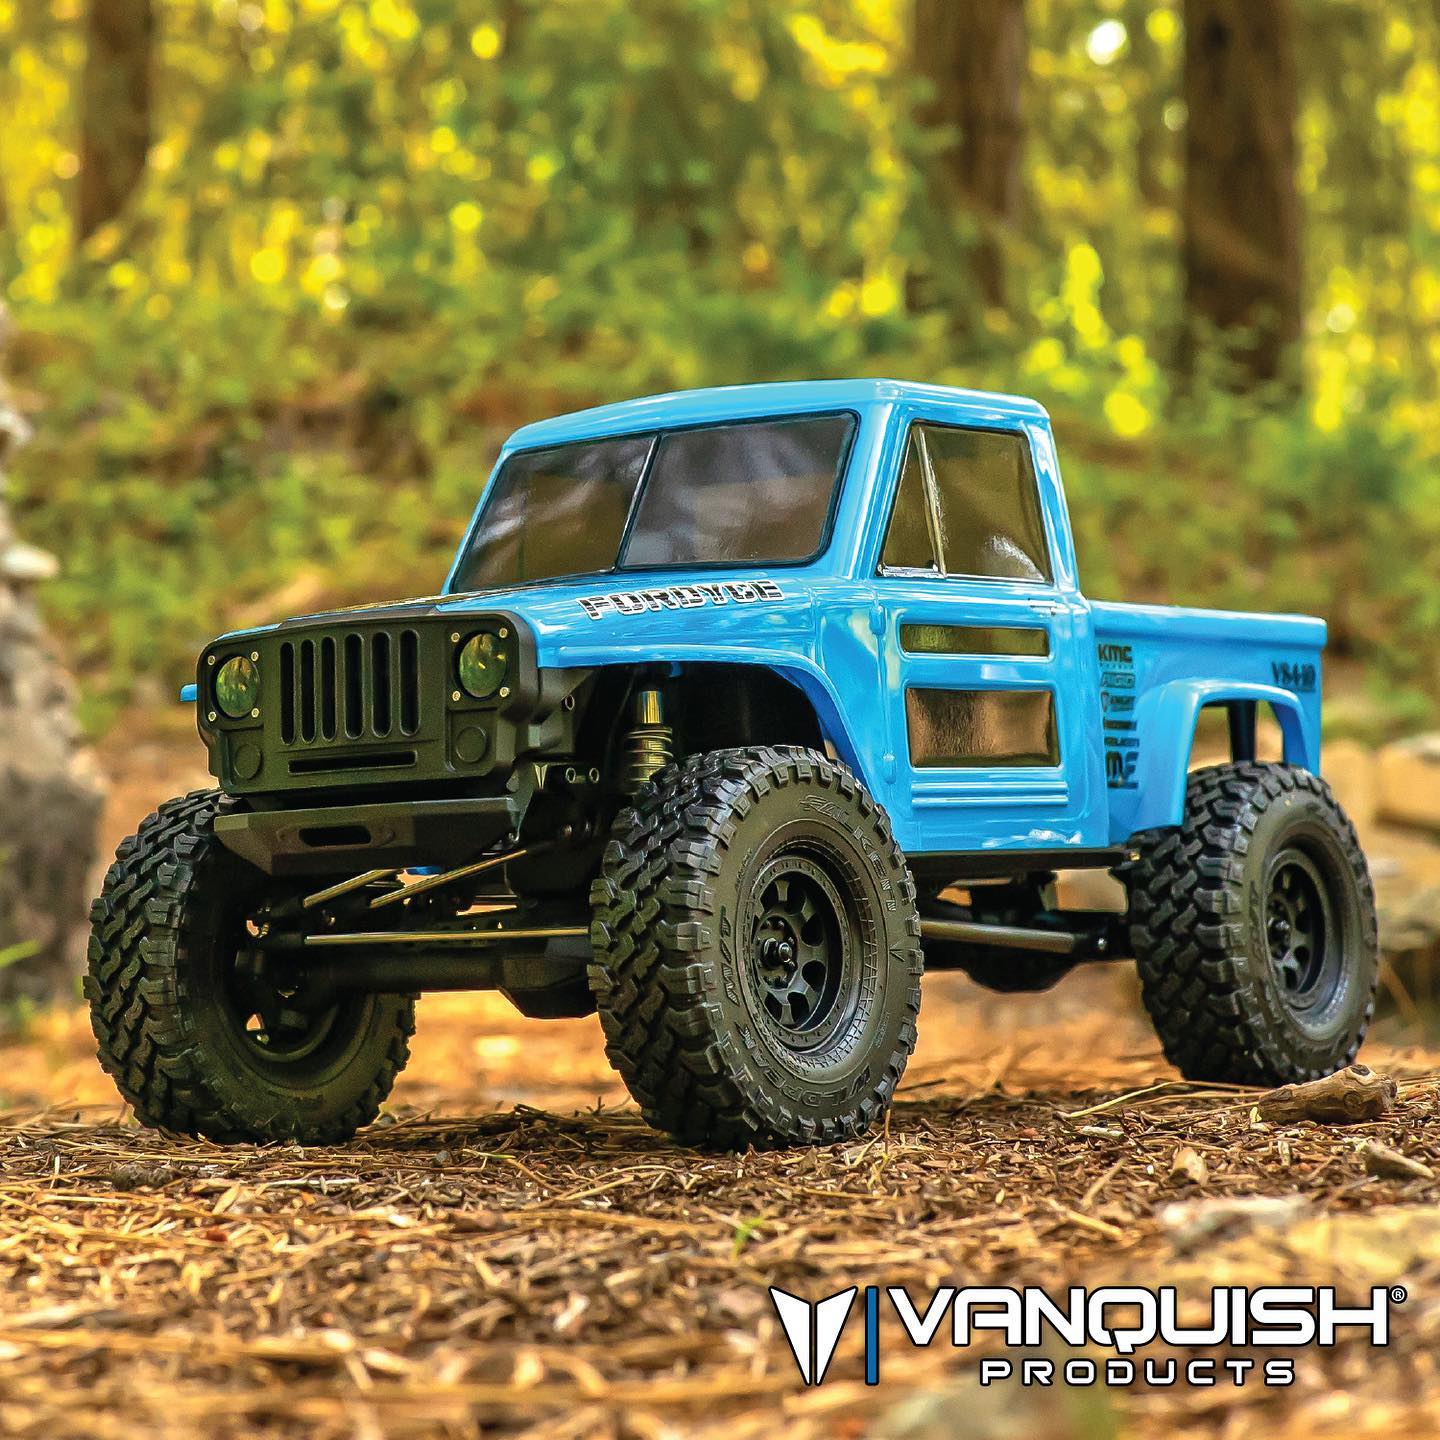 Vanquish Products VS4-10 Fordyce RTR Rock Crawler